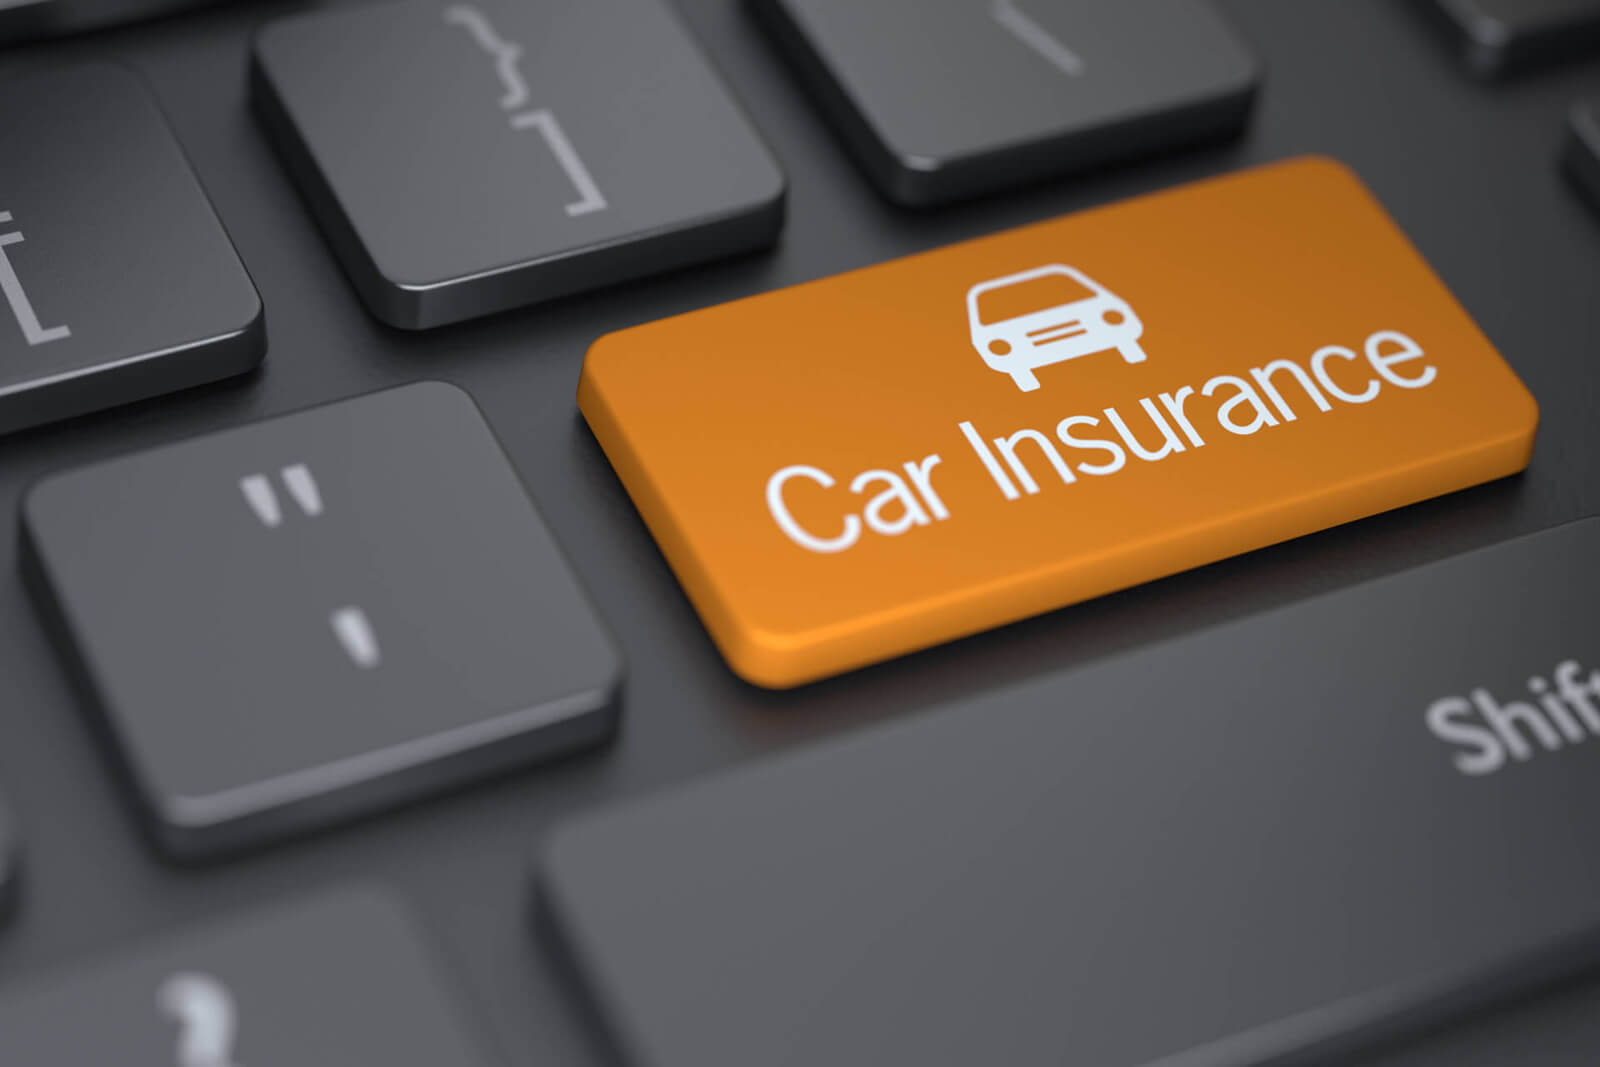 bbf car insurance key icon orange